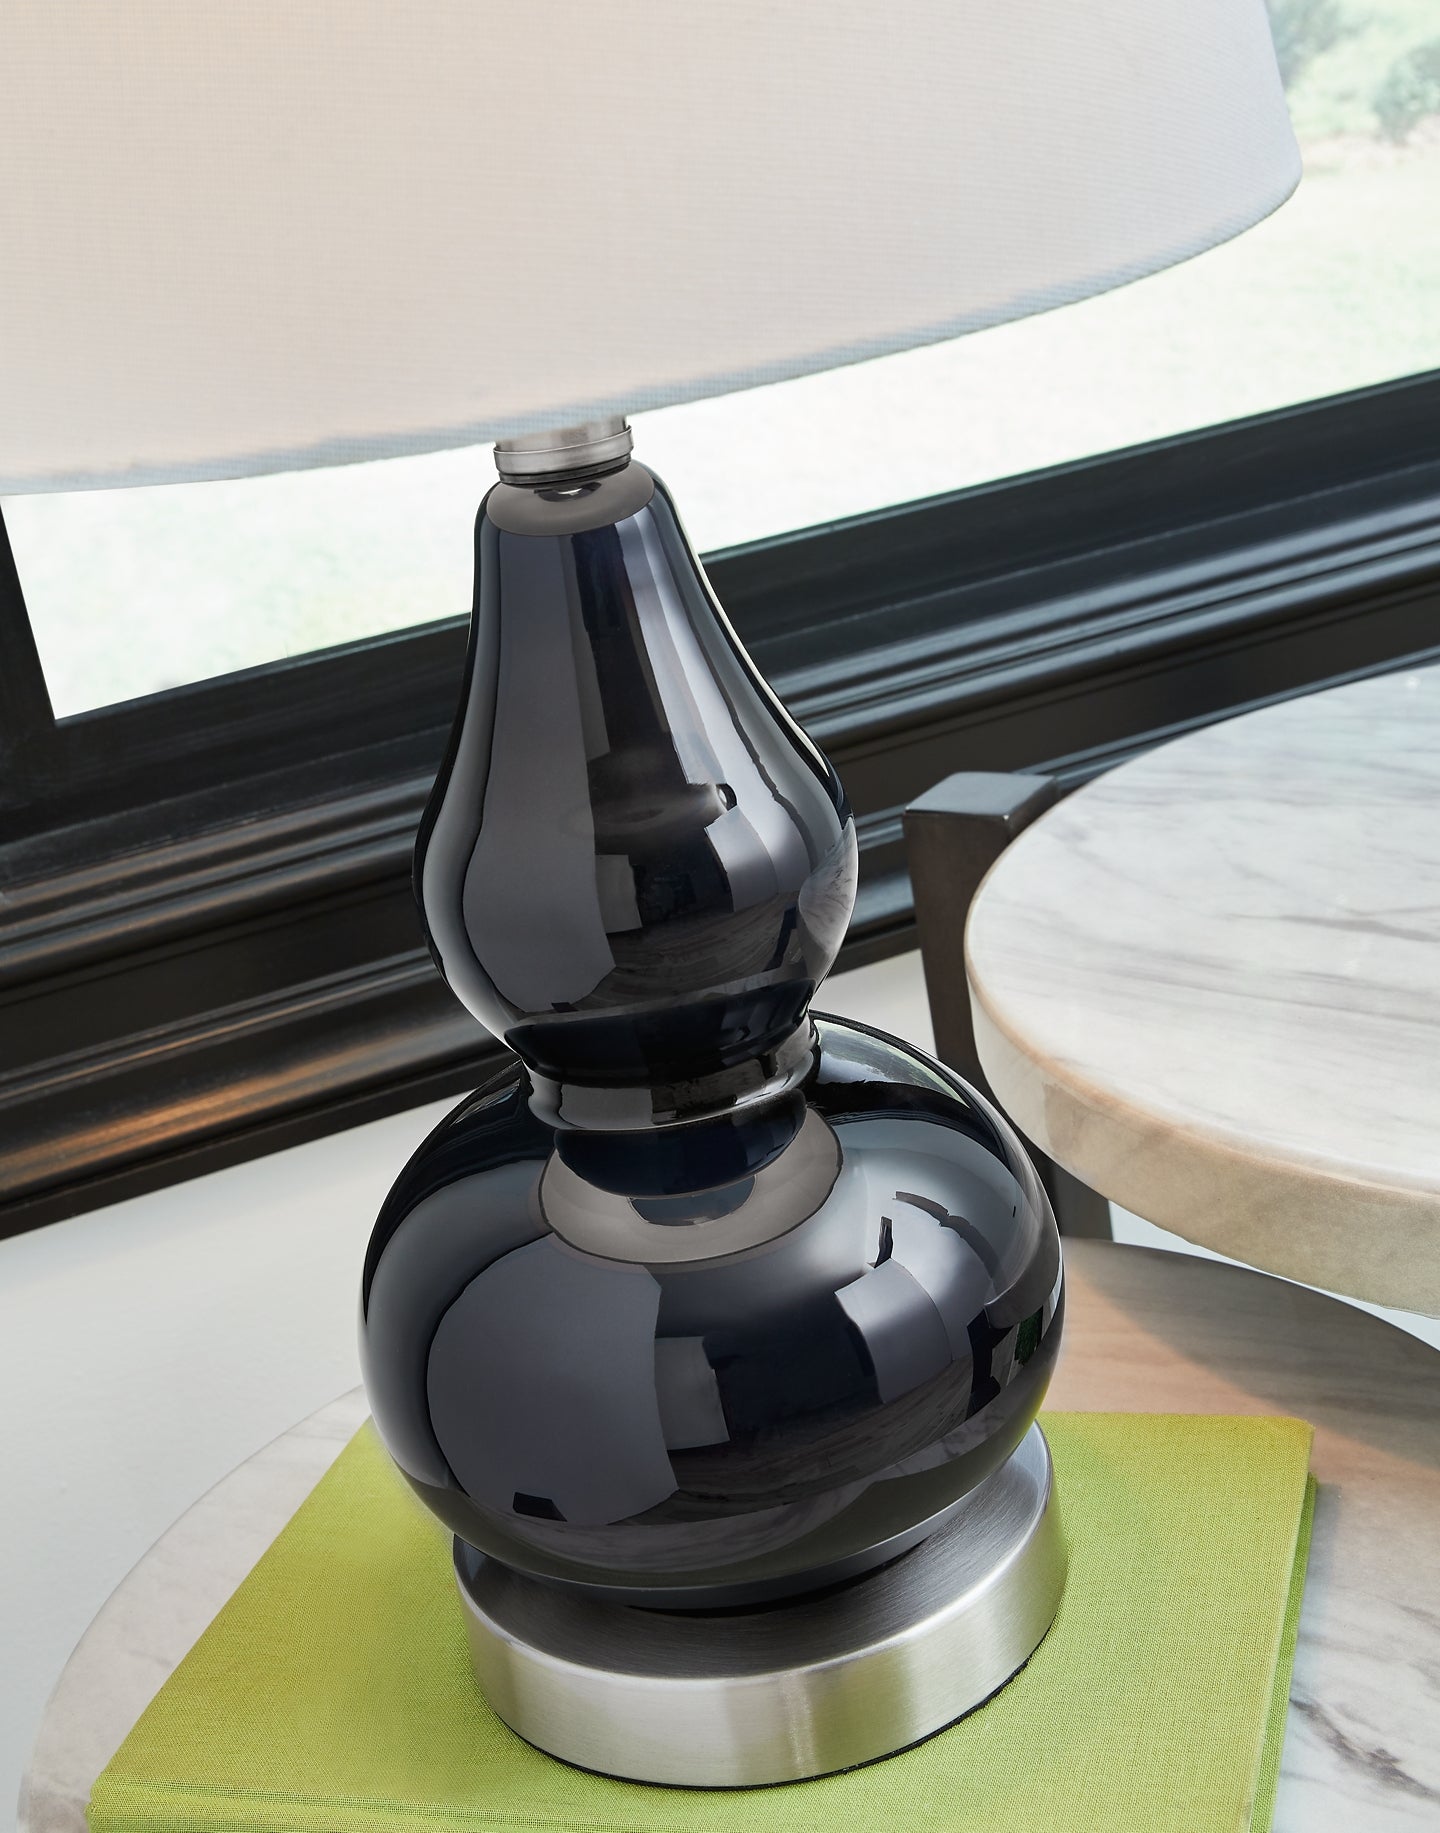 Makana Glass Table Lamp (1/CN) Signature Design by Ashley®